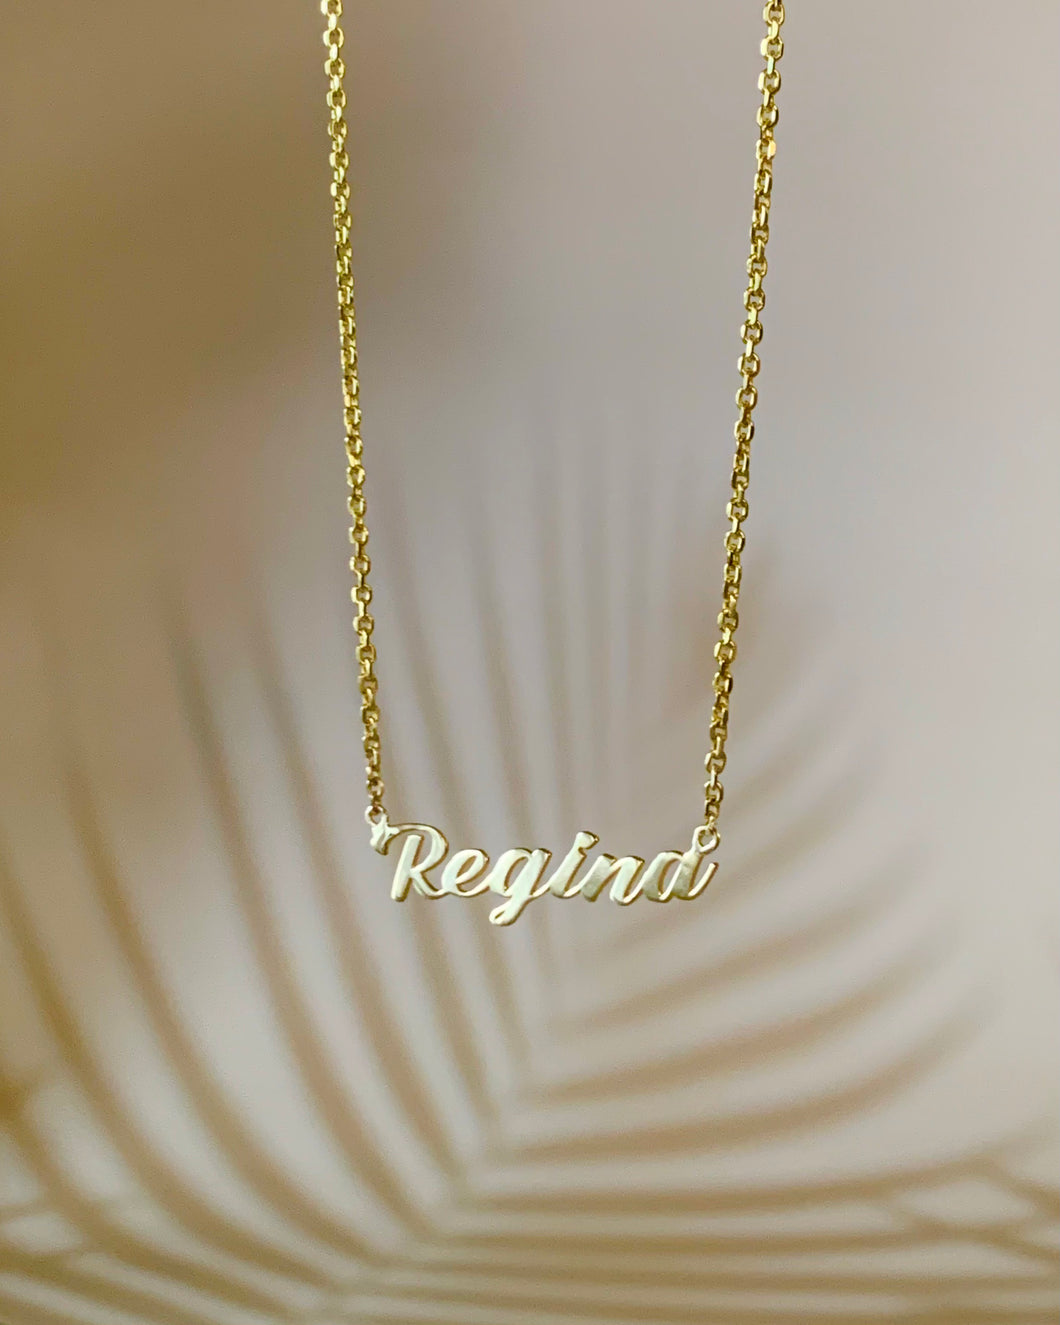 Customized gold Regina name necklace.